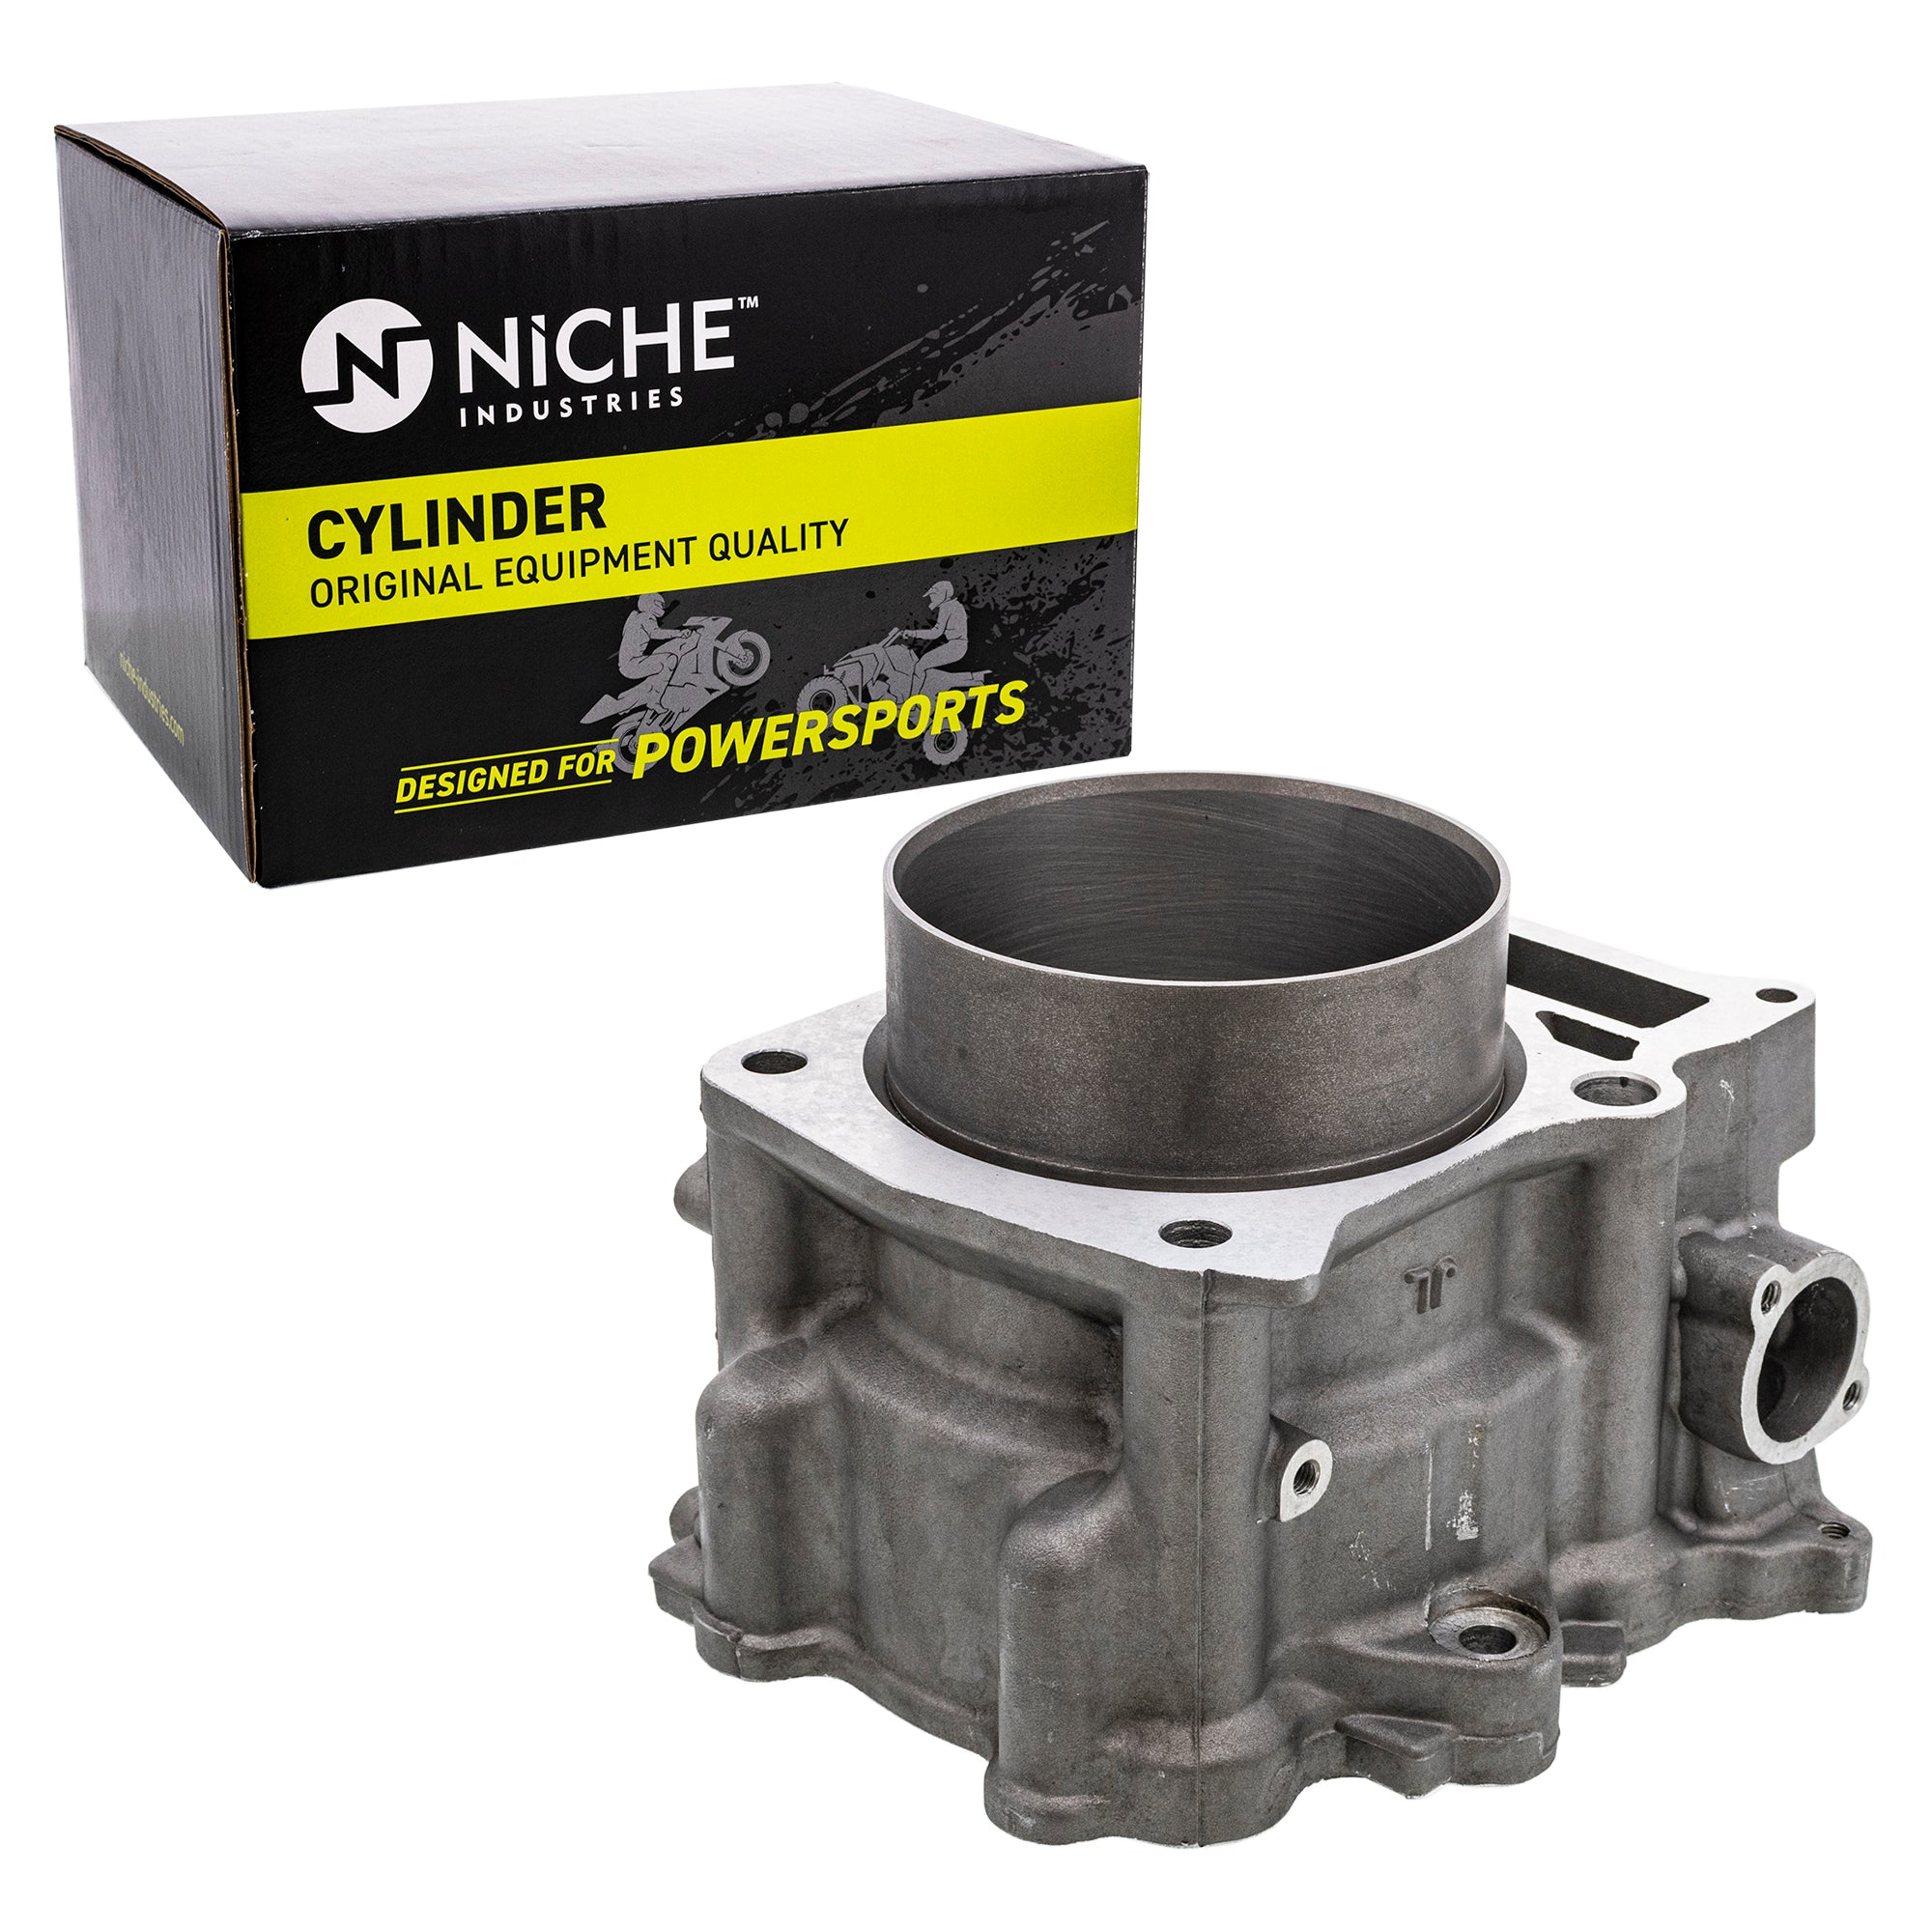 NICHE MK1012487 Cylinder Kit for Rhino Raptor Grizzly